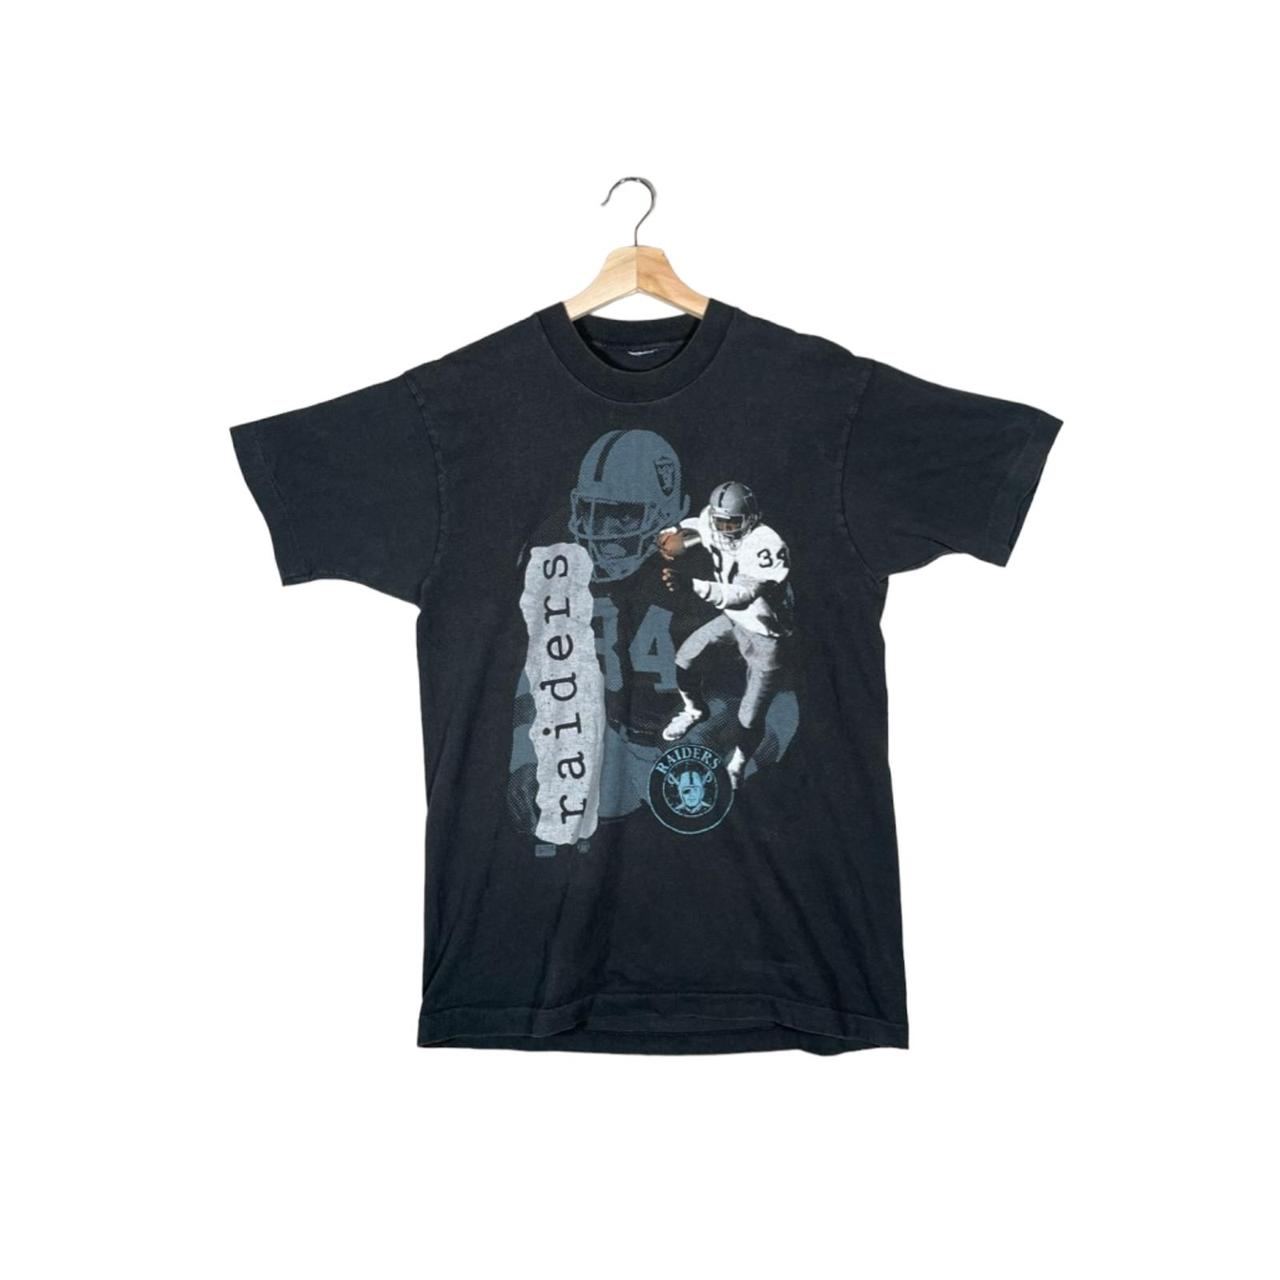 Los Angeles Raiders Vintage 90s Salem Sportswear T-Shirt - Size M